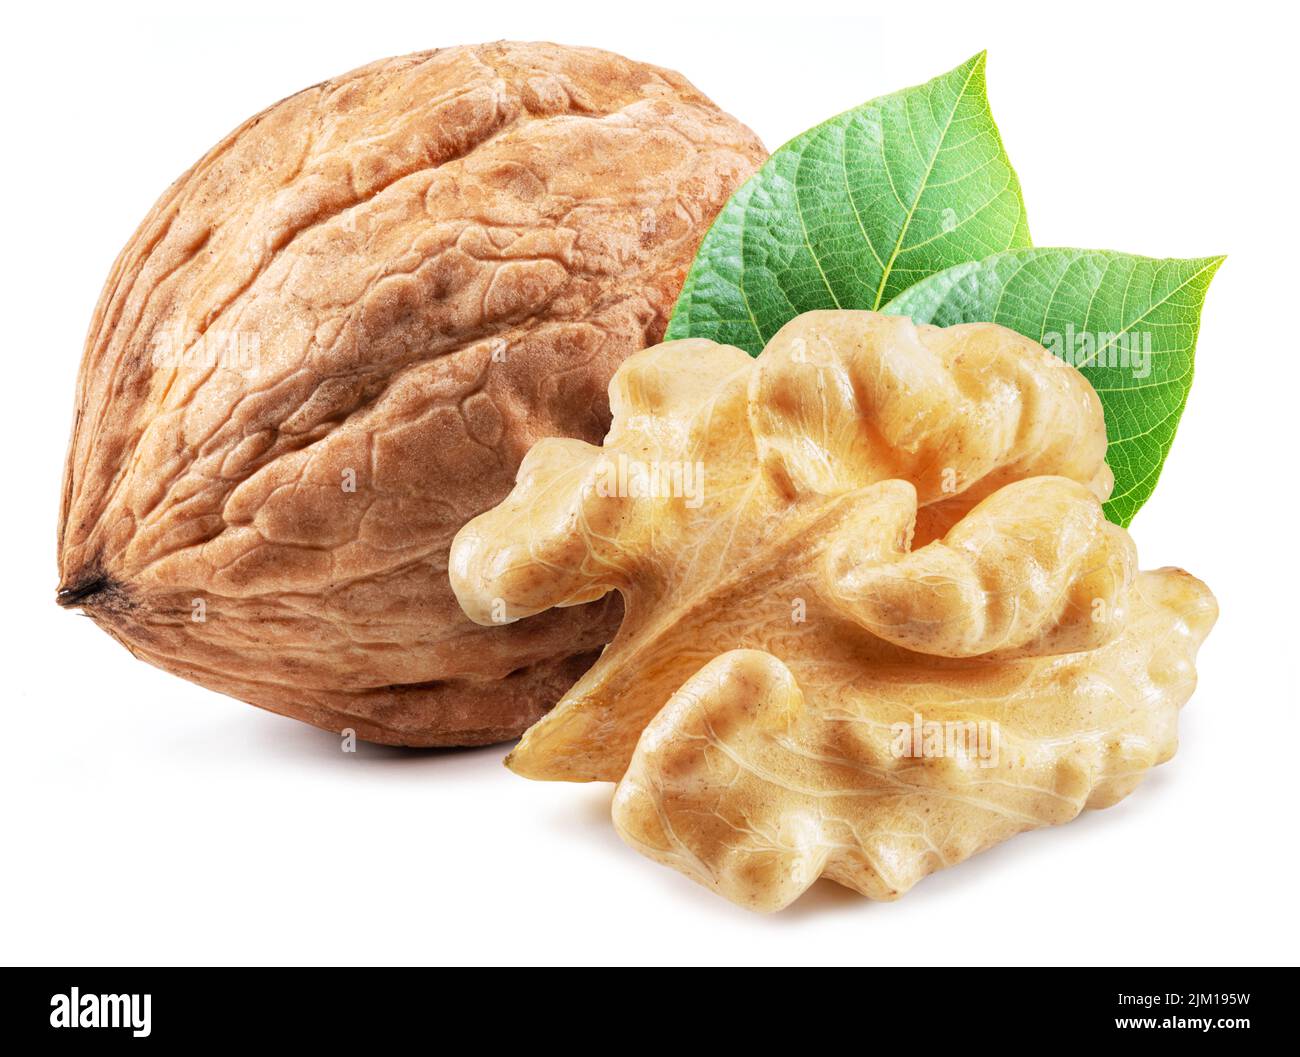 Whole walnut and walnut kernel with leaves isolated on white background. Stock Photo